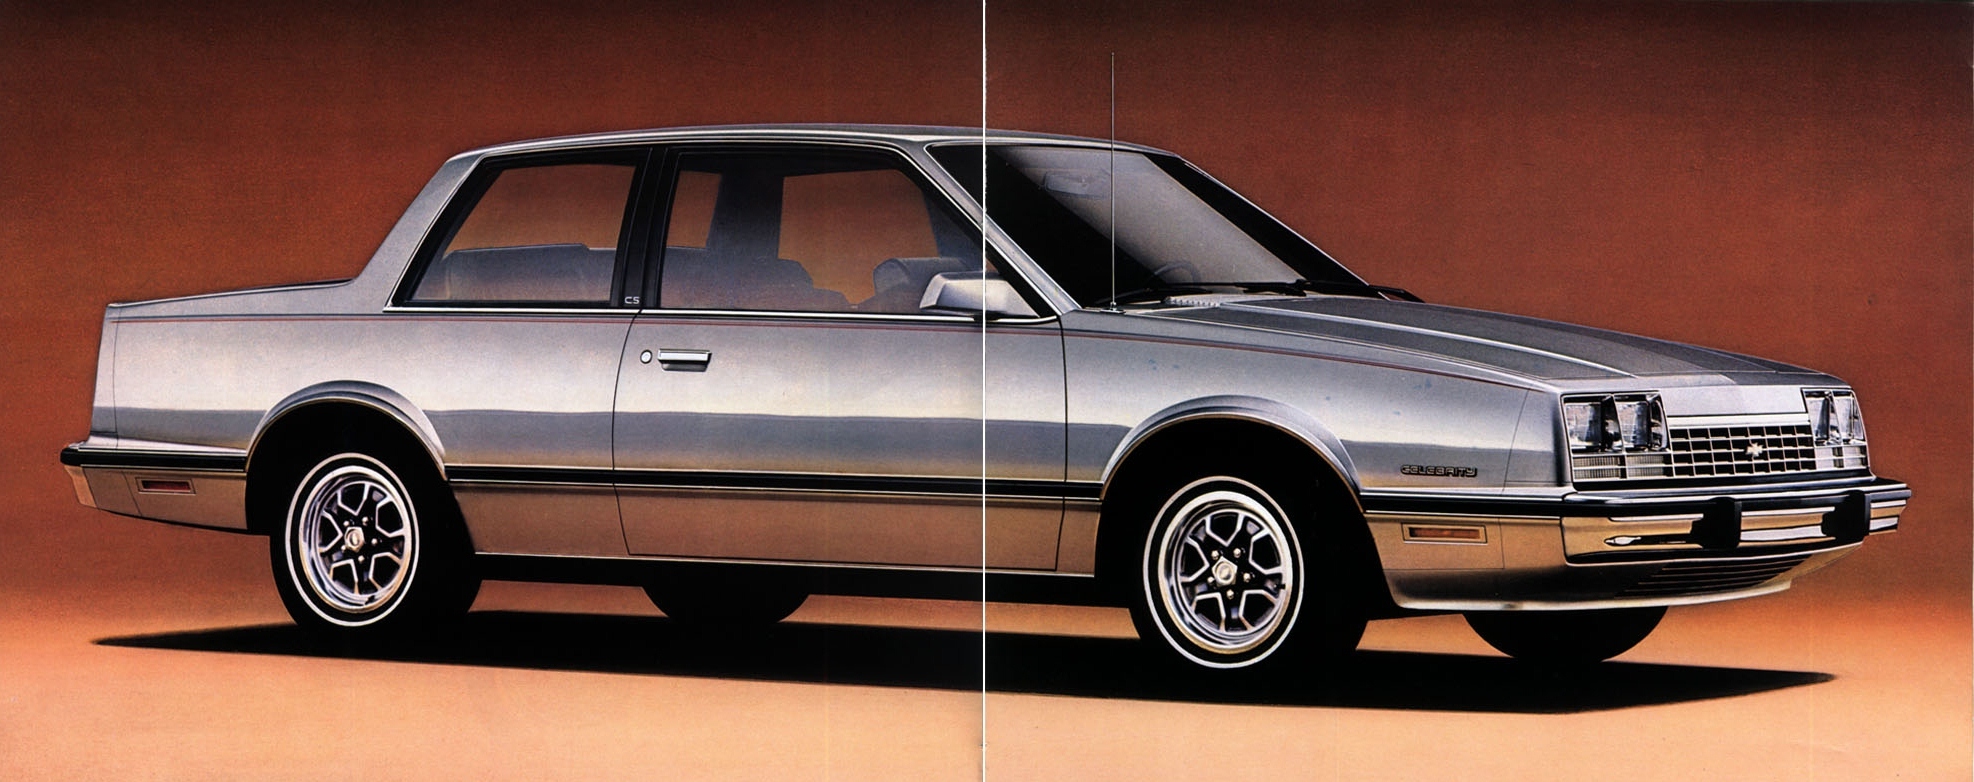 Chevrolet celebrity 1988 photo - 3